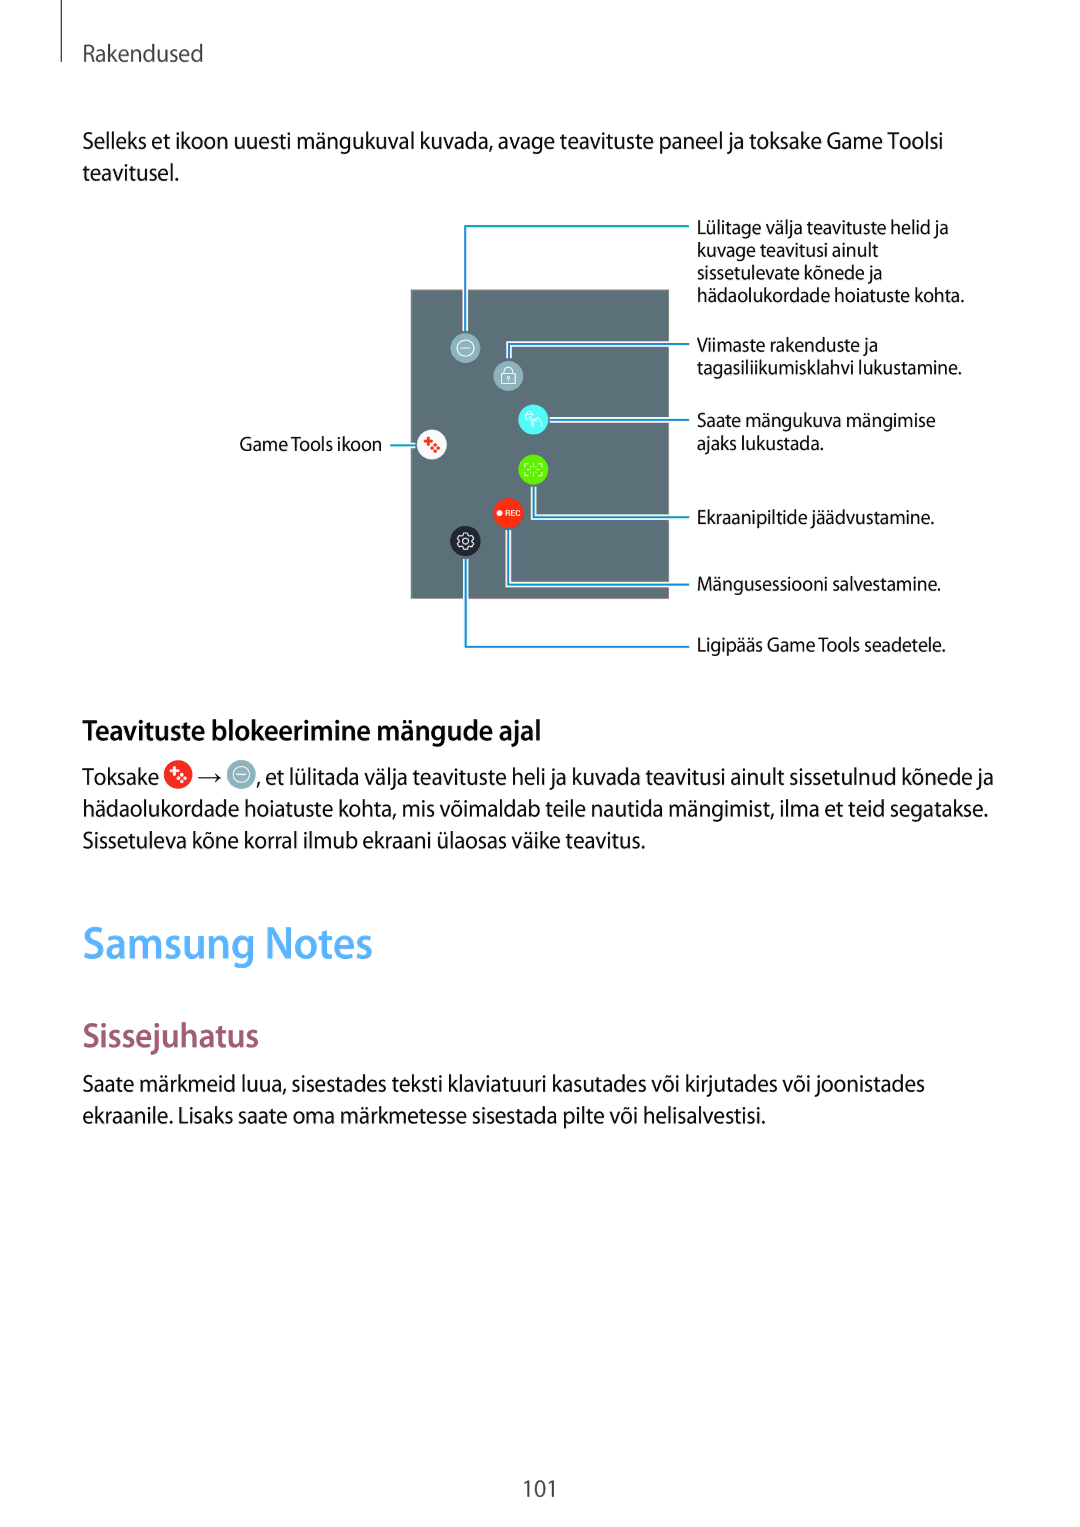 Samsung SM-A520FZKASEB, SM-A520FZIASEB, SM-A520FZDASEB manual Samsung Notes, Teavituste blokeerimine mängude ajal 